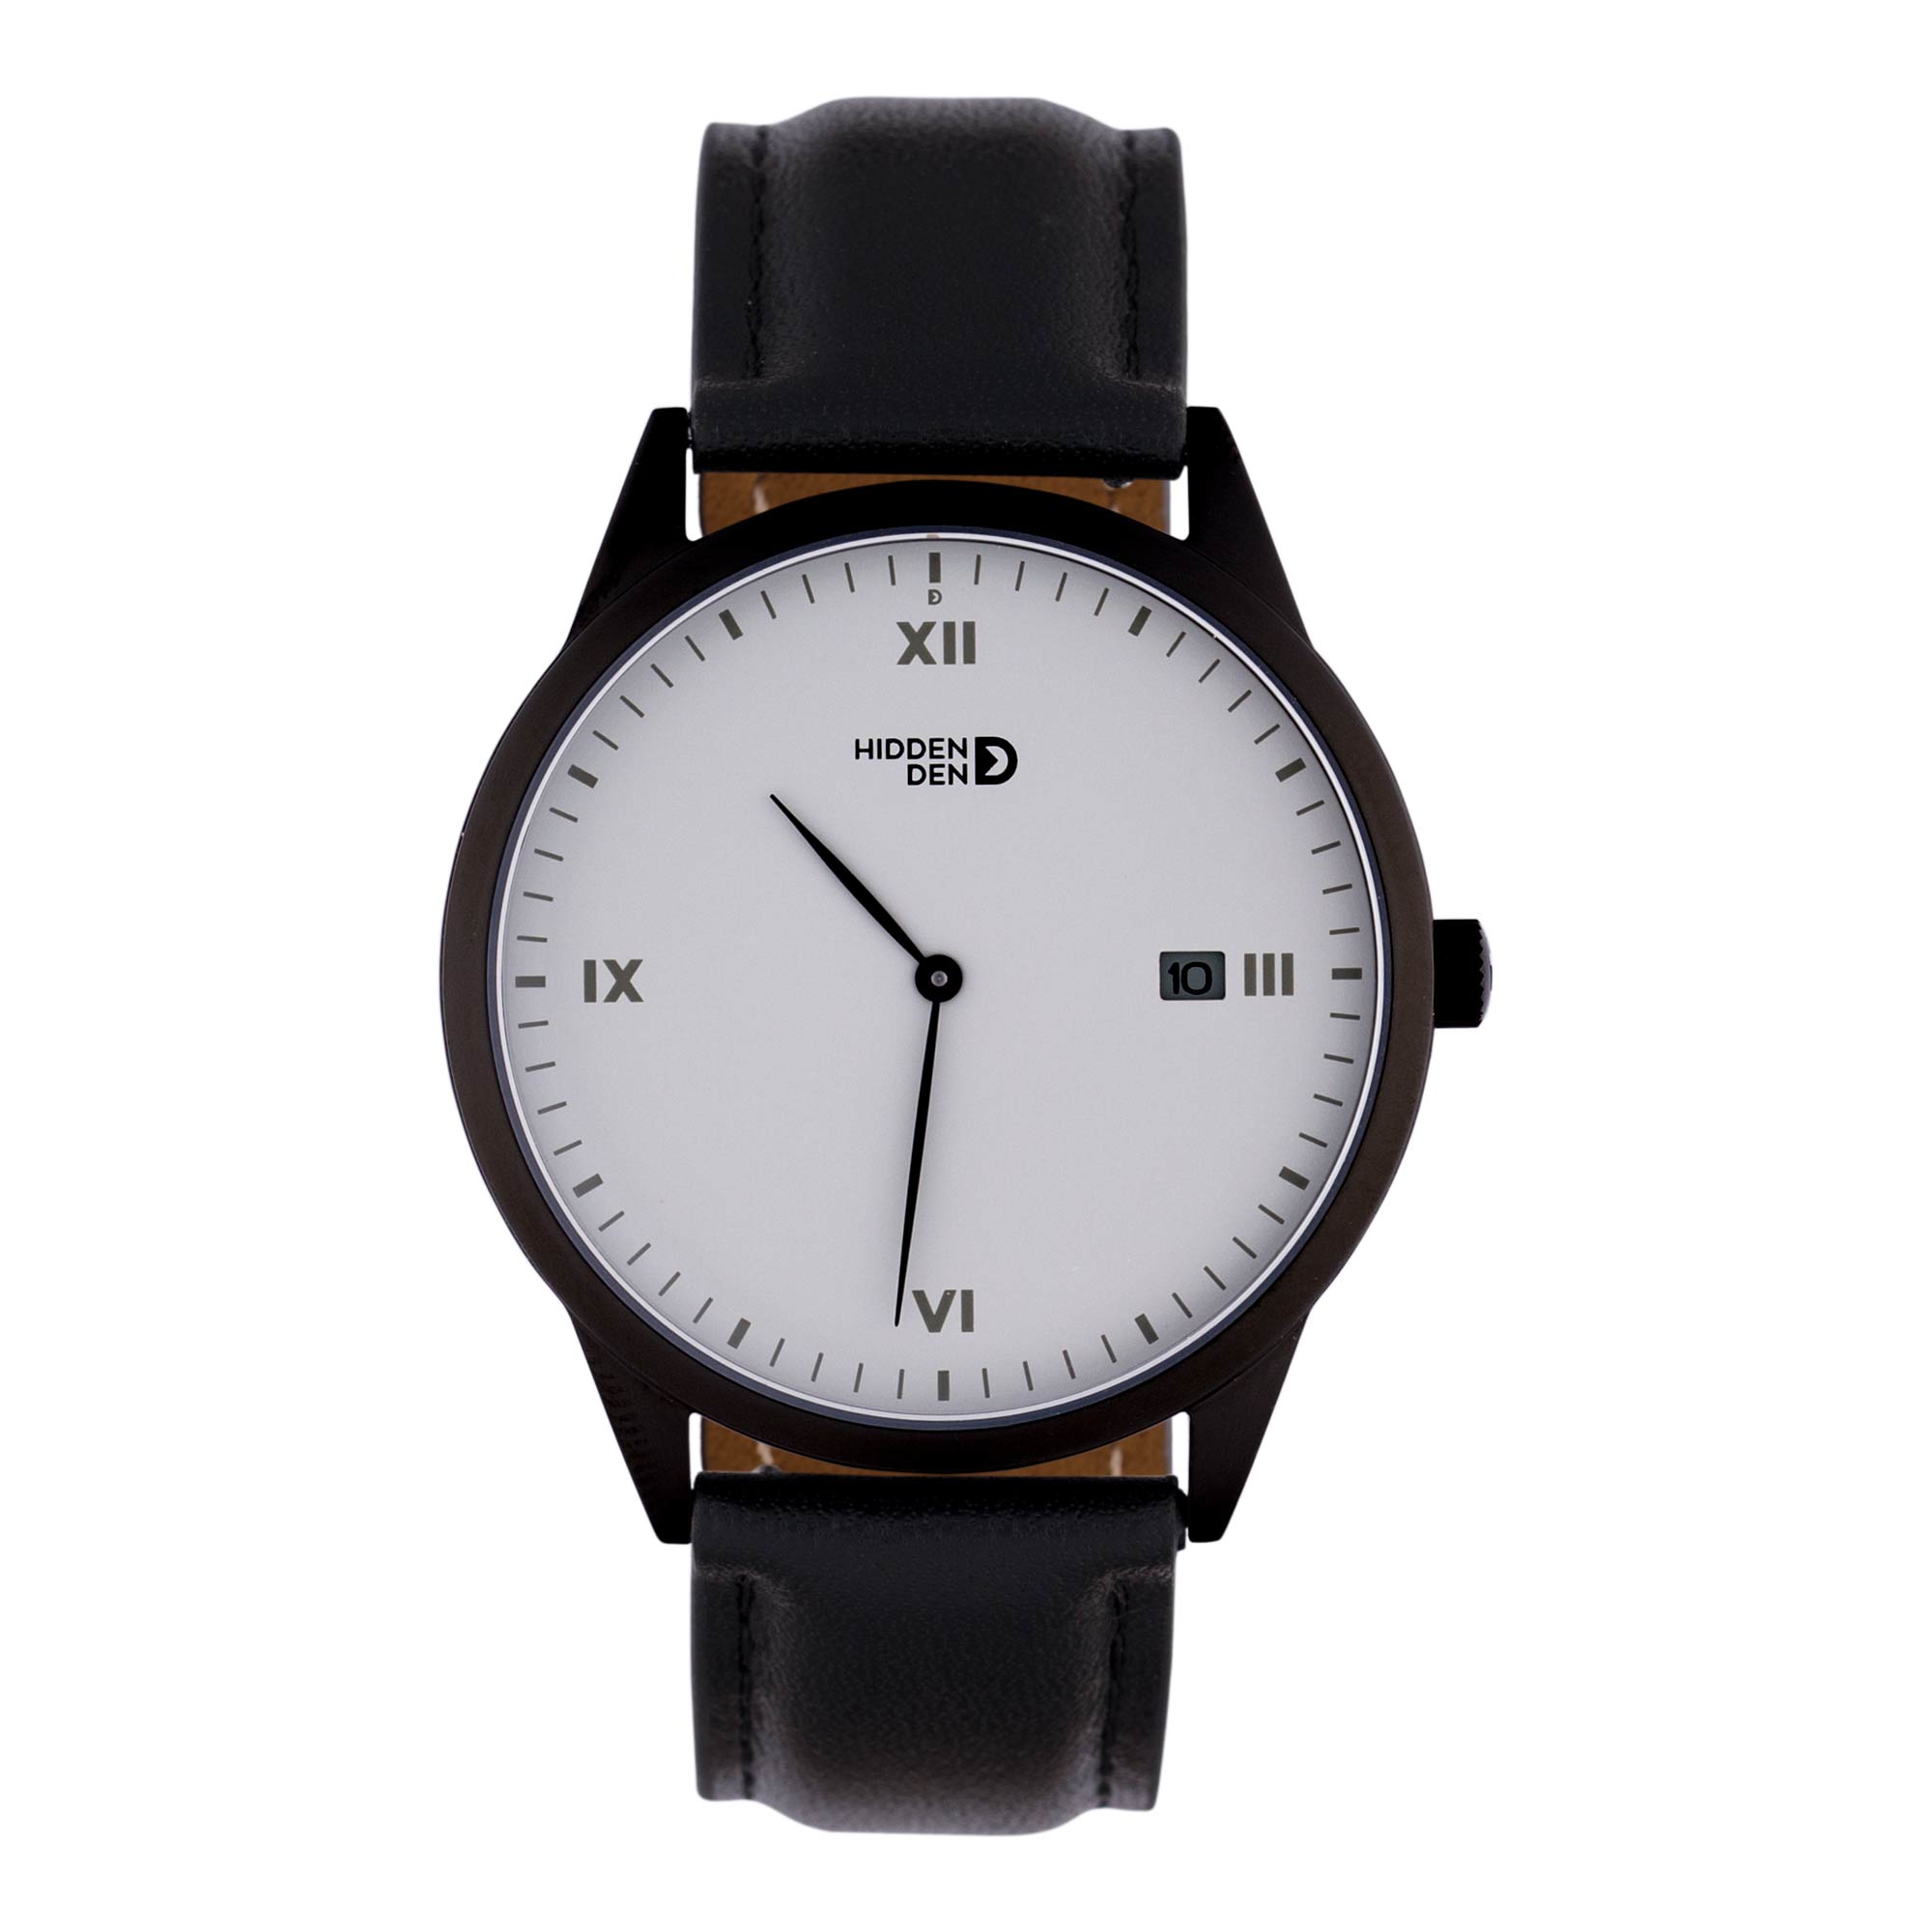 Coma Full Black - Classic black & white watch